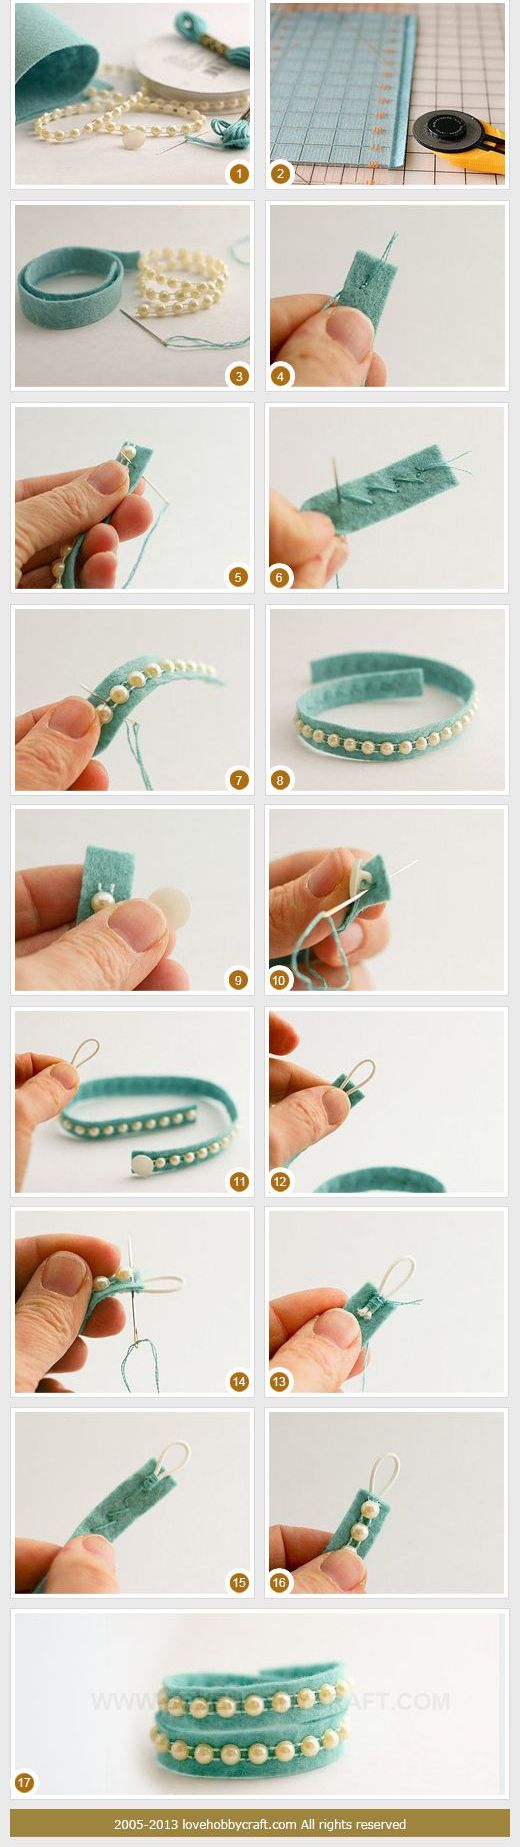 felt-workshop-step-by-step-felt-bracelet